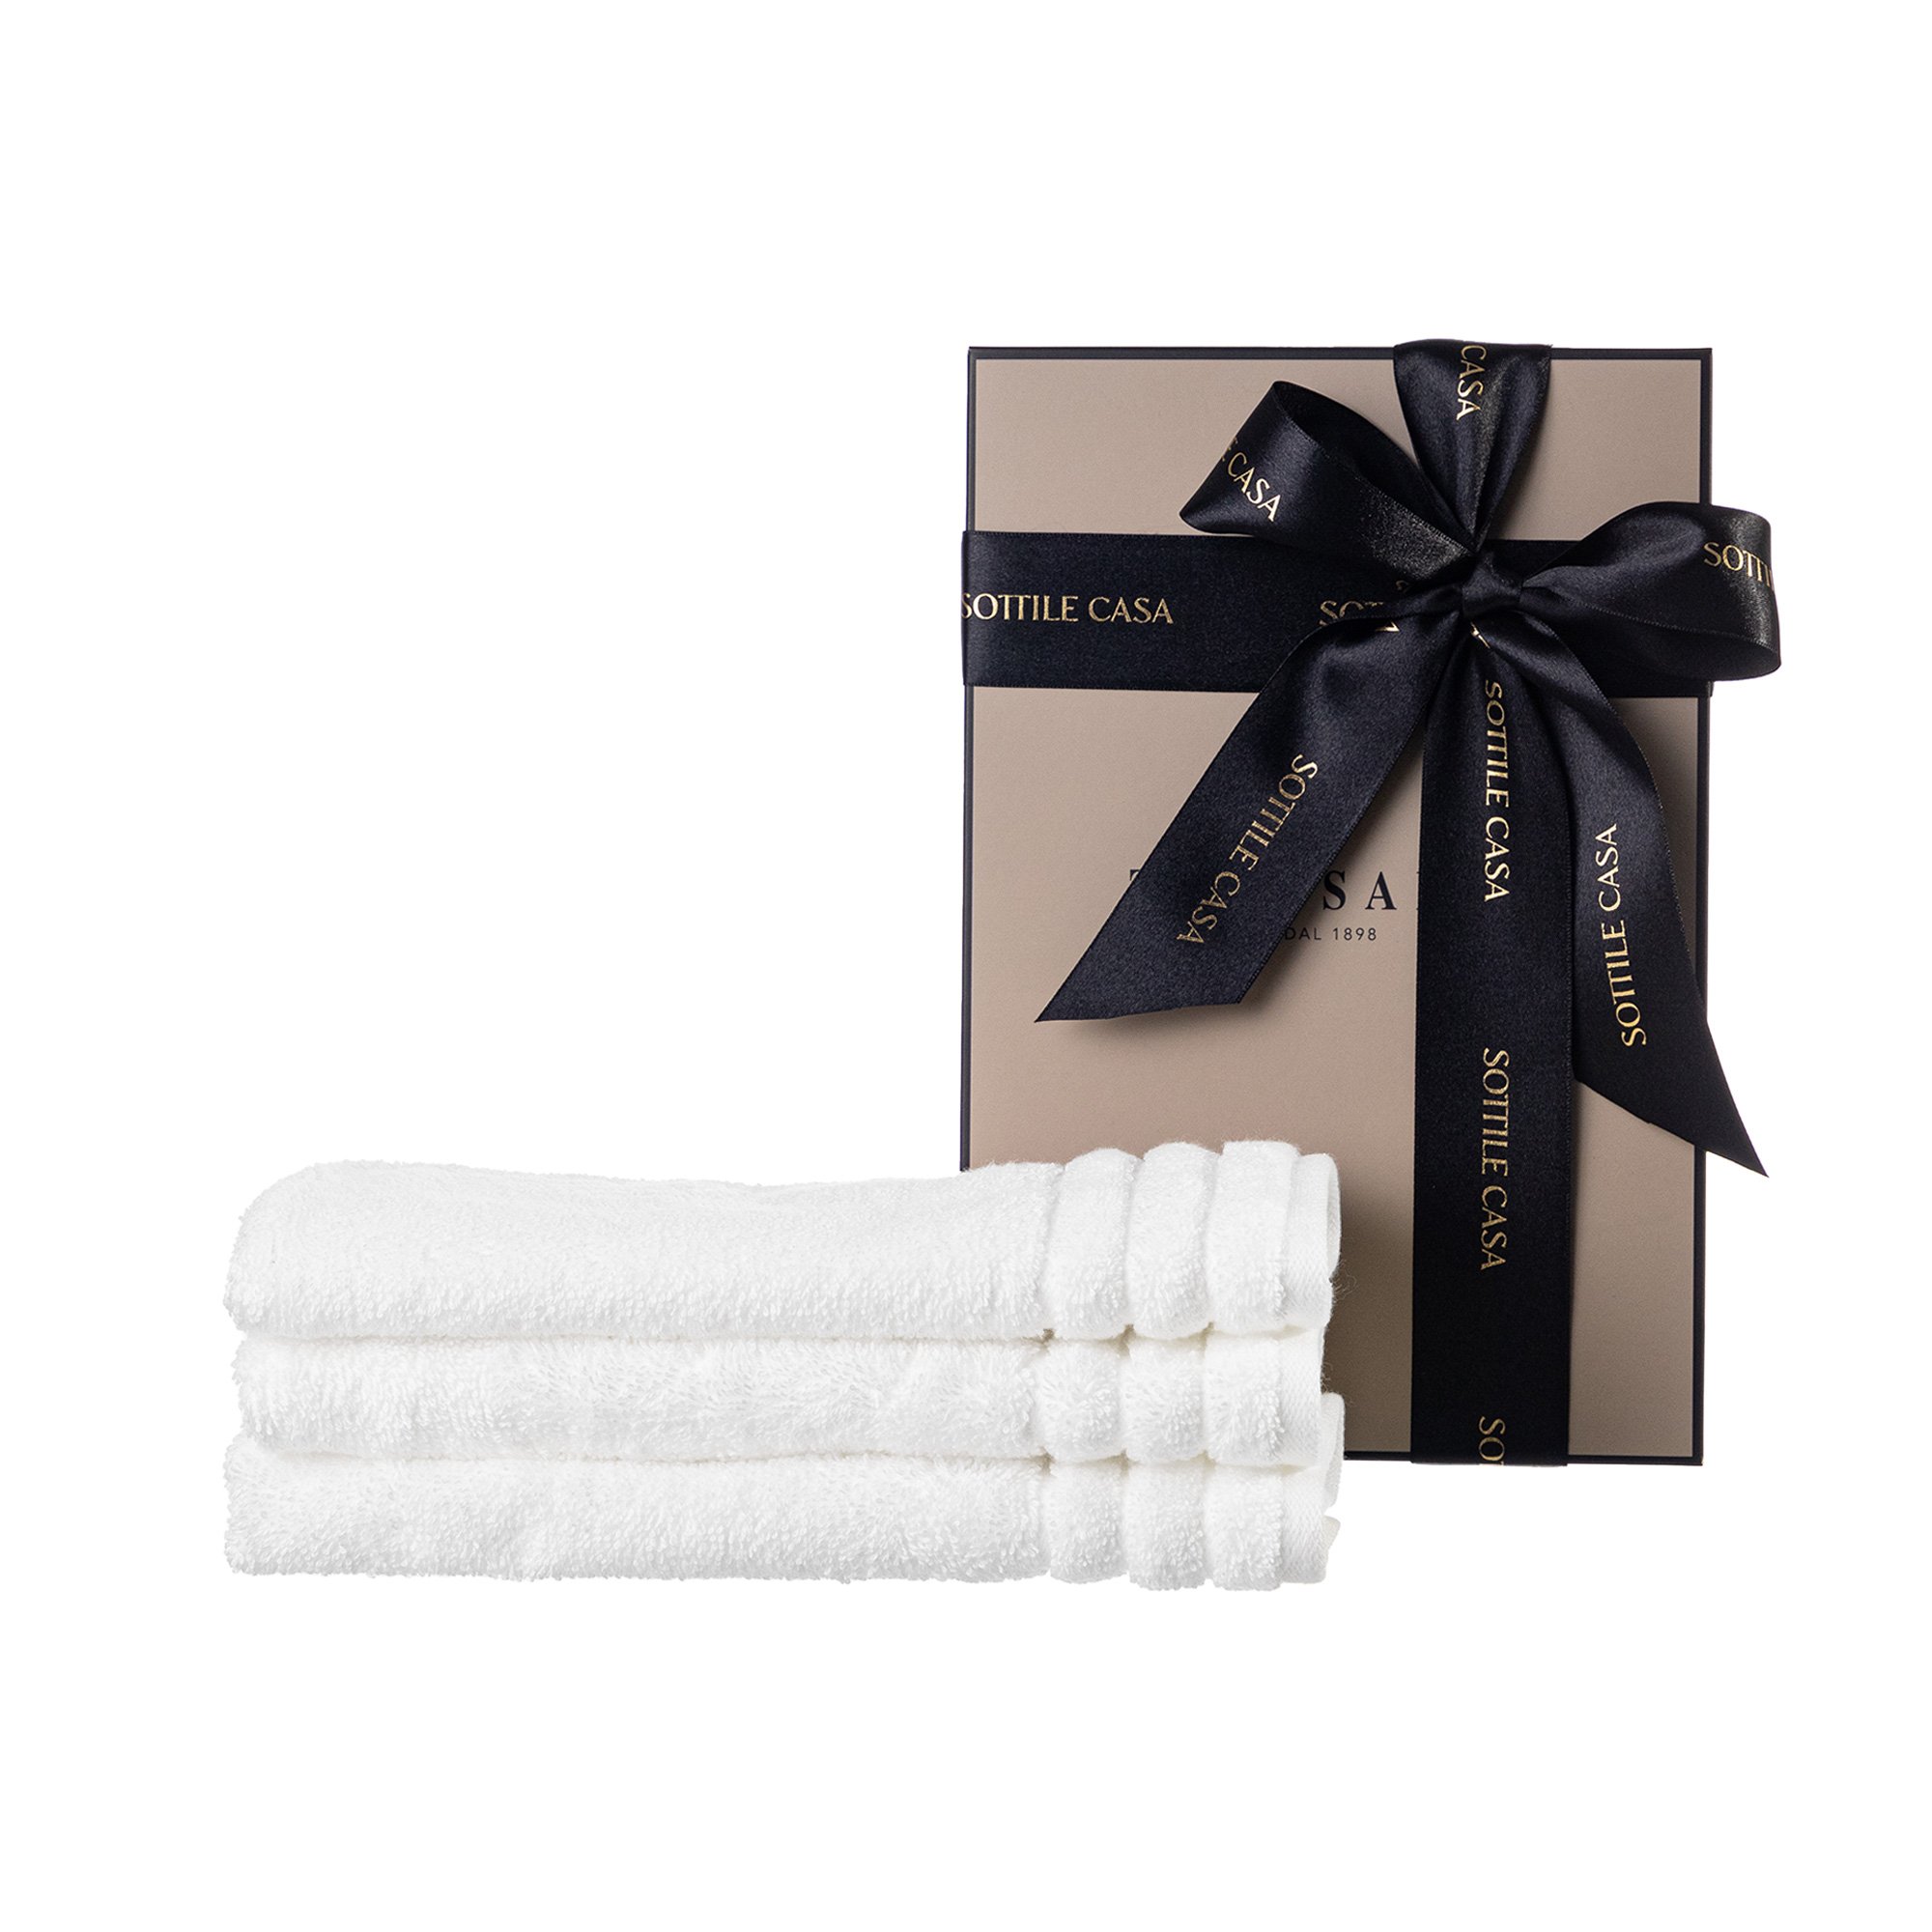 kit presente 3 toalhas lavabo trussardi imperiale branca still sottile casa